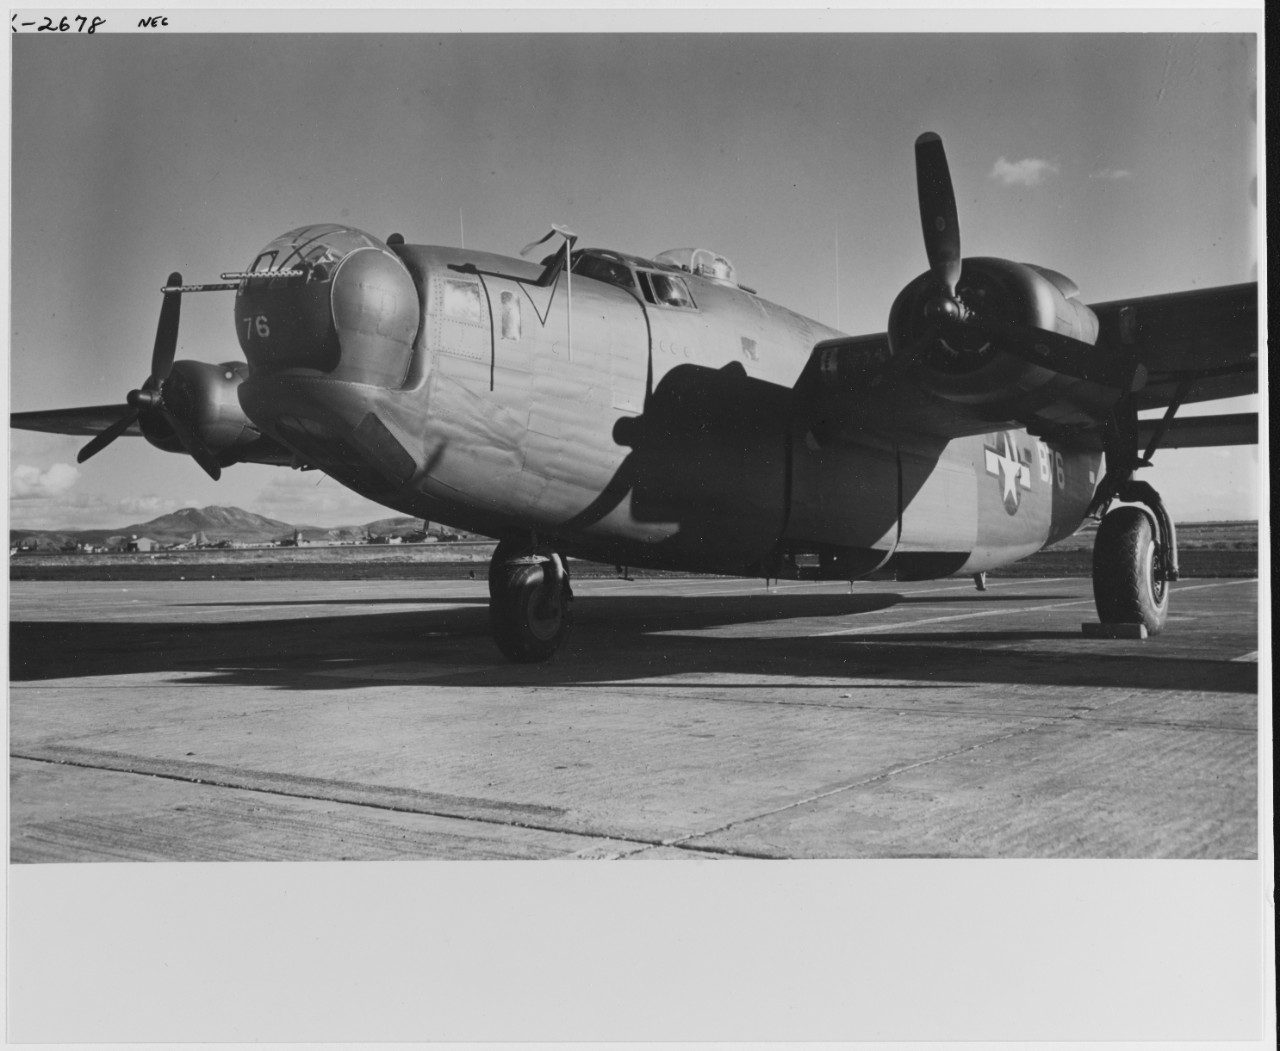 Consolidated B-24 "Liberator" Bomber